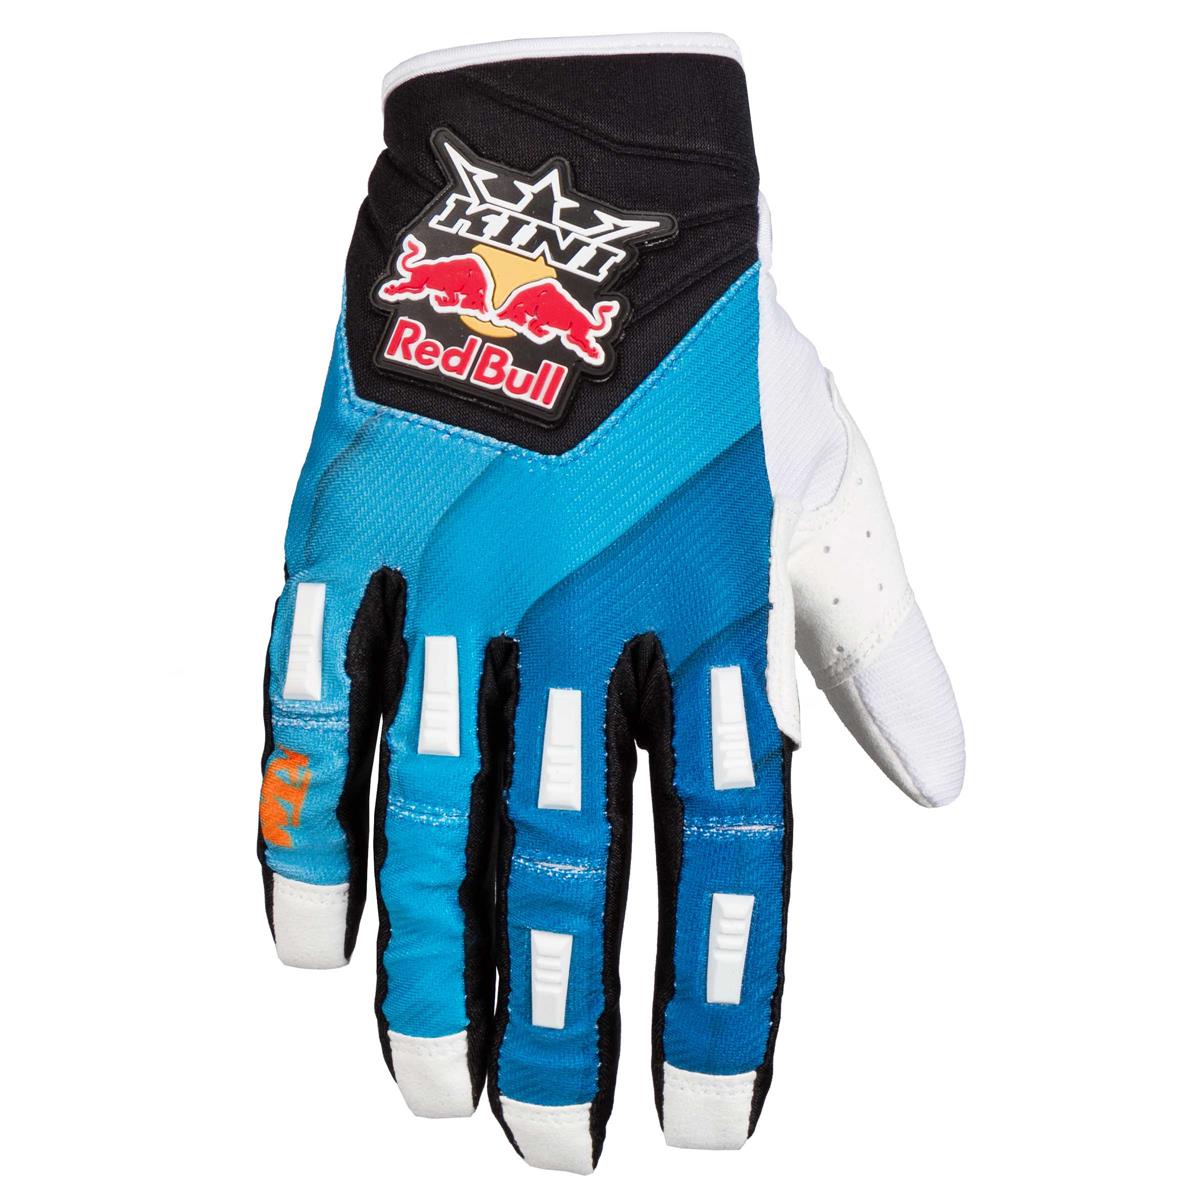 Kini Red Bull Handschuhe Vintage Blau/Schwarz/Weiß